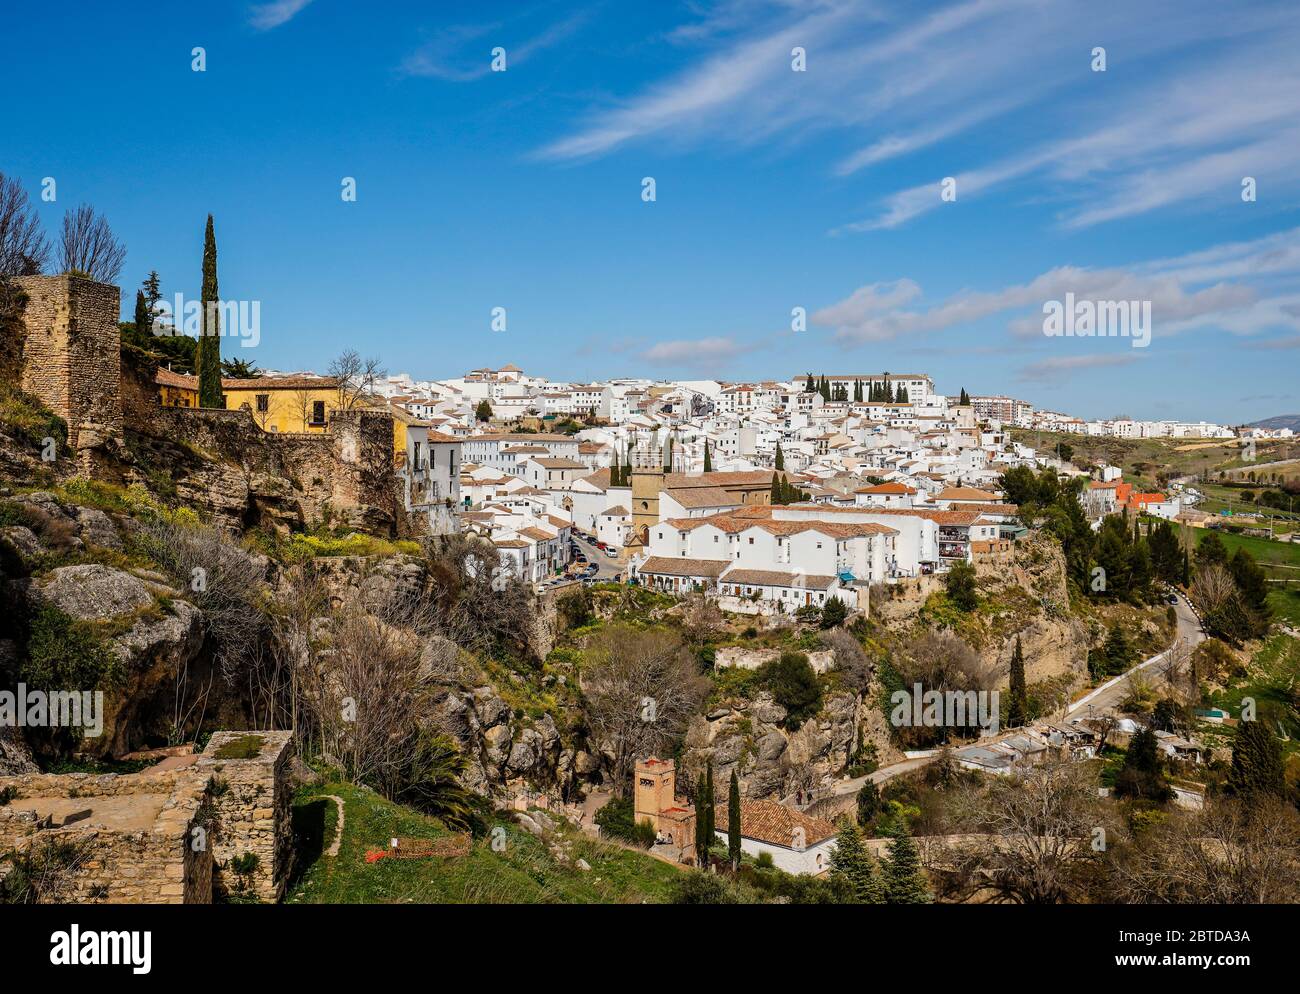 Ronda, Malaga Province, Andalusia, Spain - The mountain village of Ronda is a popular destination for tourists.   Ronda, Provinz Malaga, Andalusien, S Stock Photo